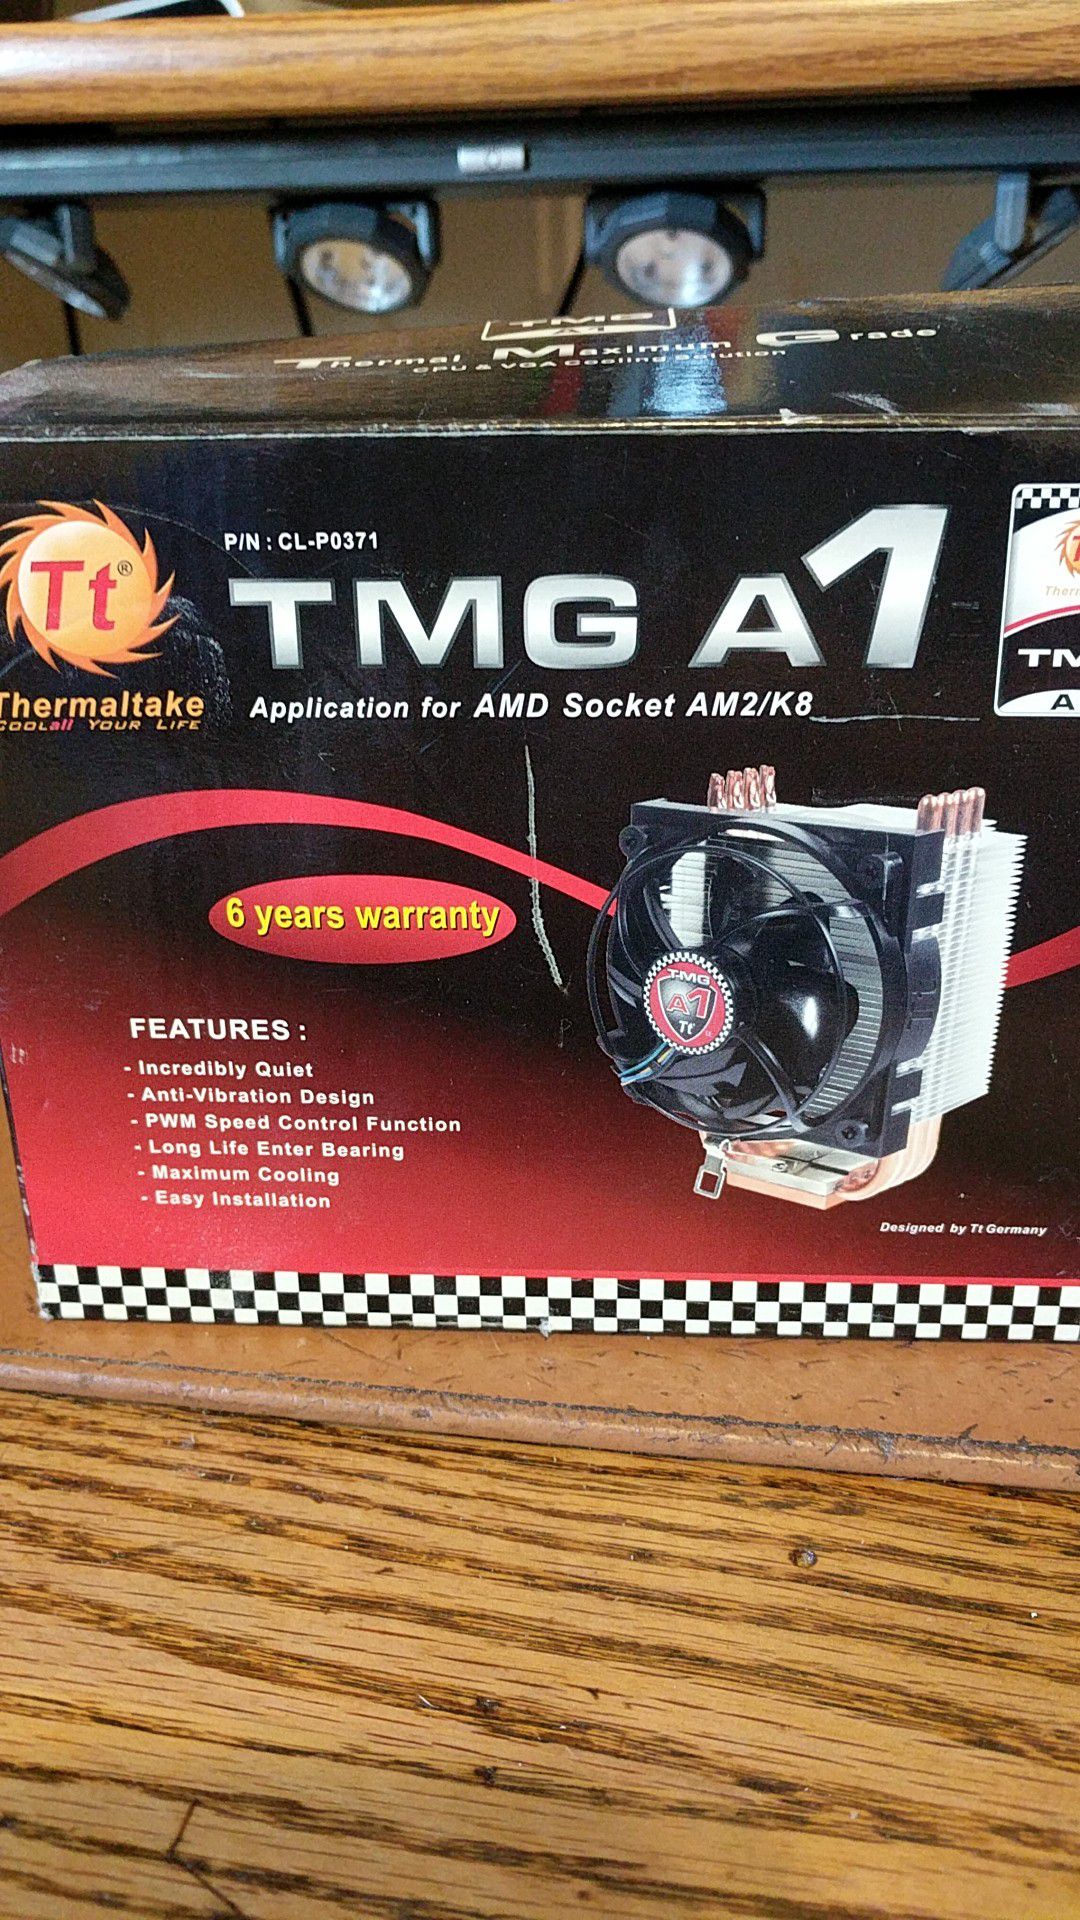 Thermaltake TMG A1 AMD socket AM2/K8